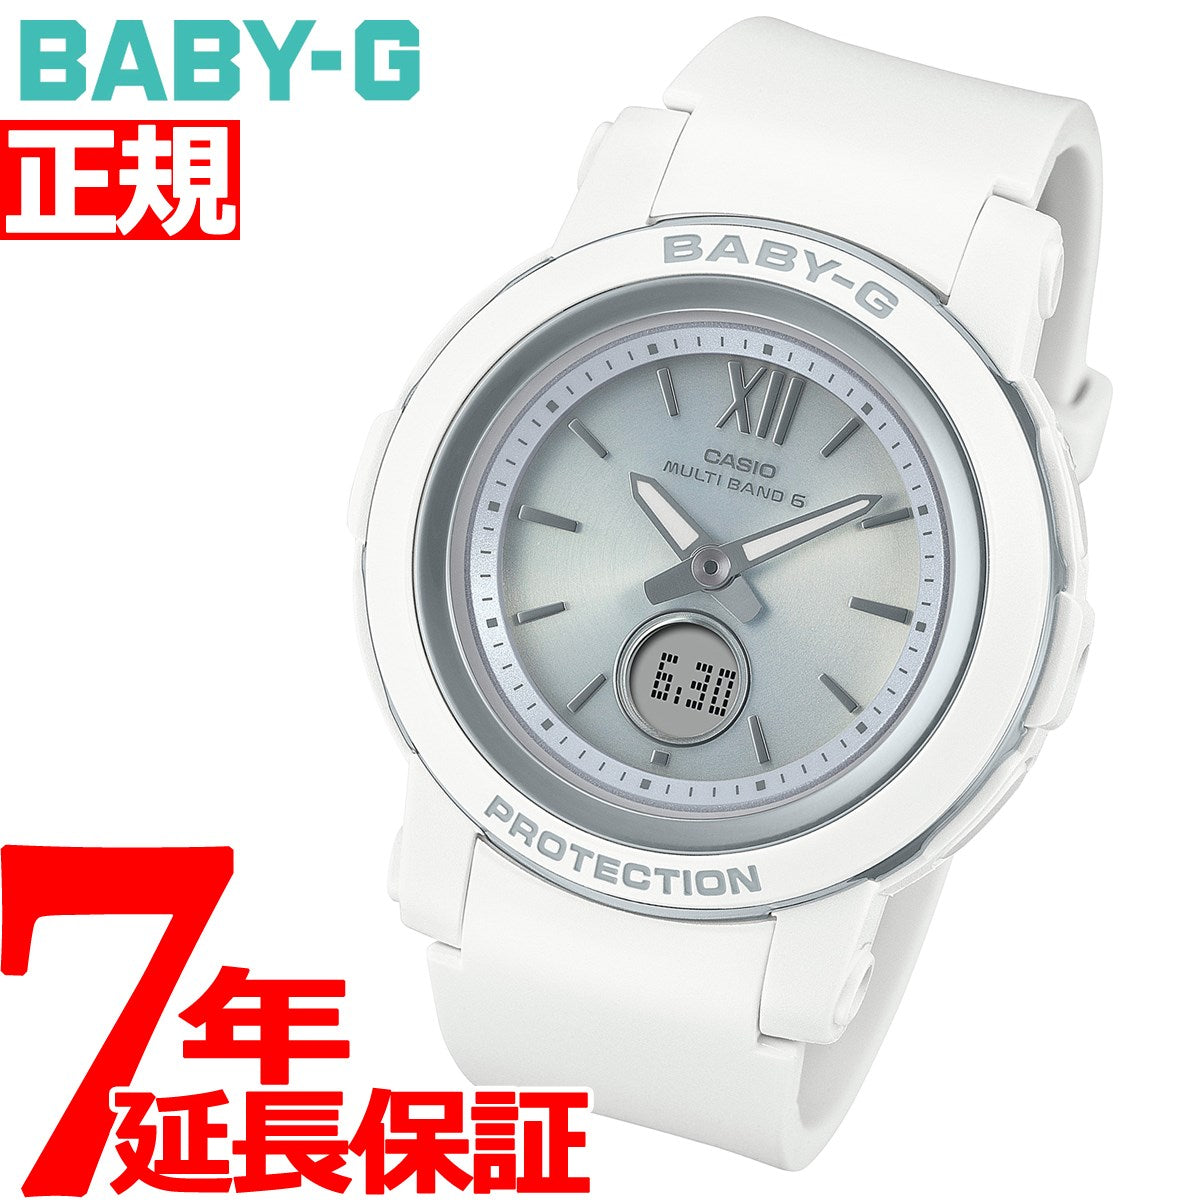 BABY-G カシオ ベビーG レディース 電波 ソーラー 腕時計 タフソーラー BGA-2900-7AJF ホワイト